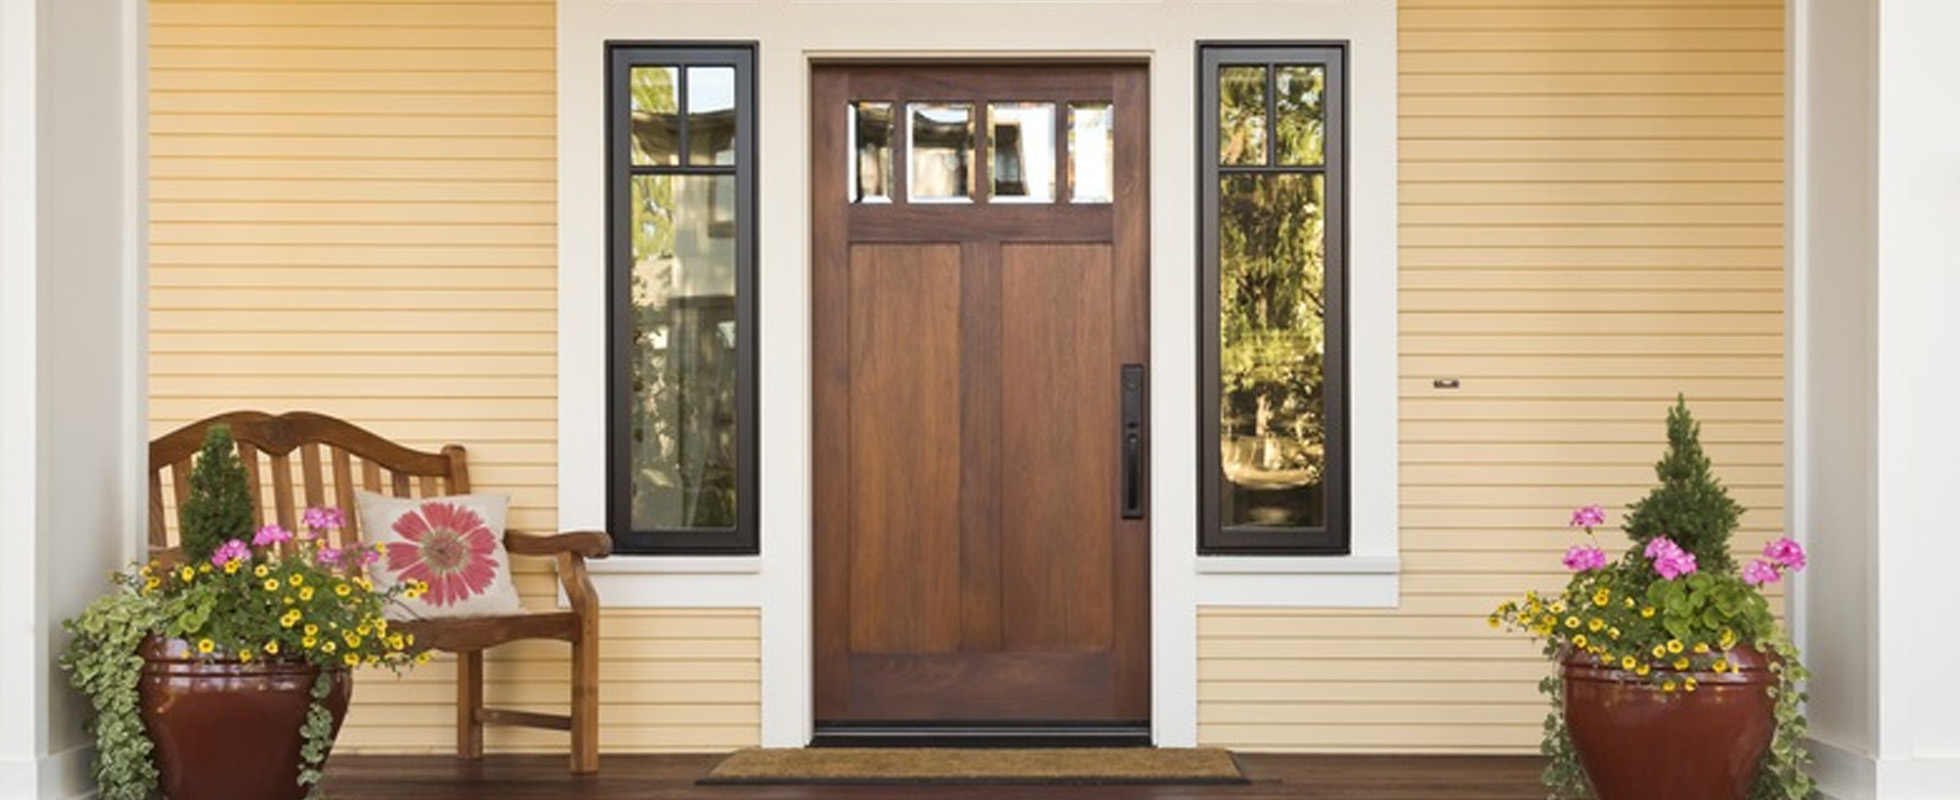 doors-windows-rh-designs-concepts